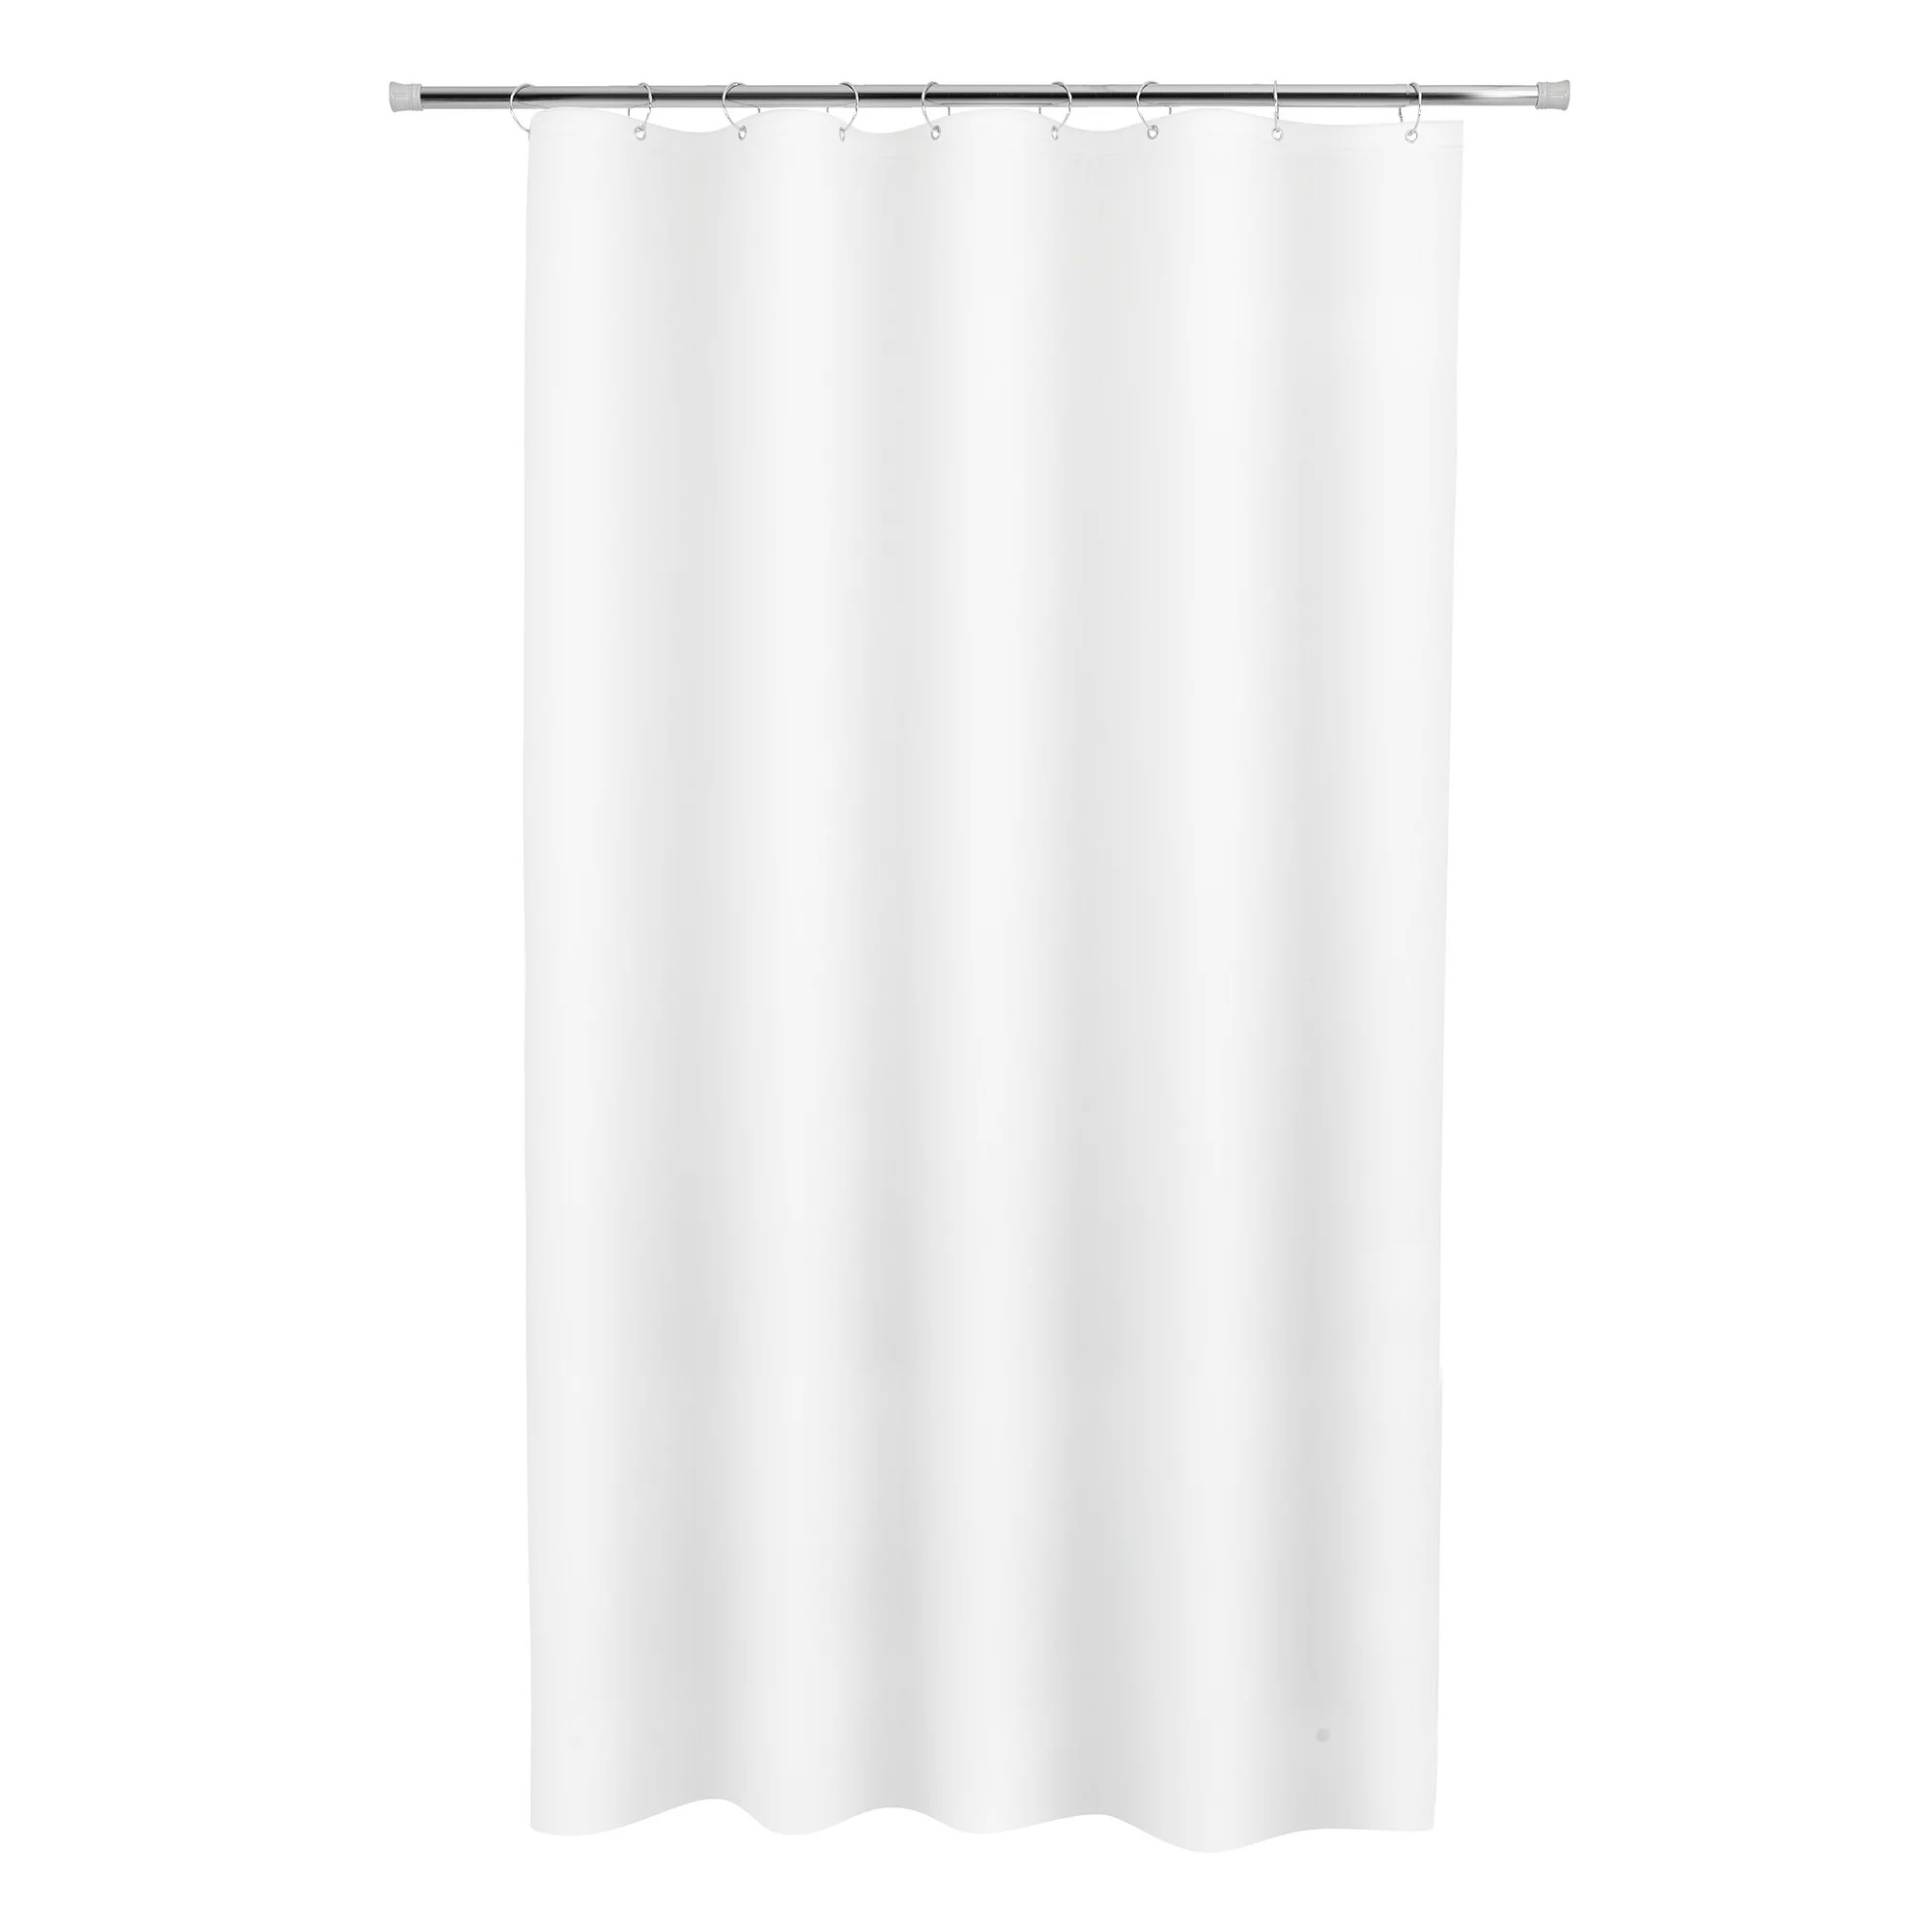 54" x 78" Mainstays Medium Weight PEVA Shower Curtain Liner $1.24 + Free S&H w/ Walmart+ or $35+